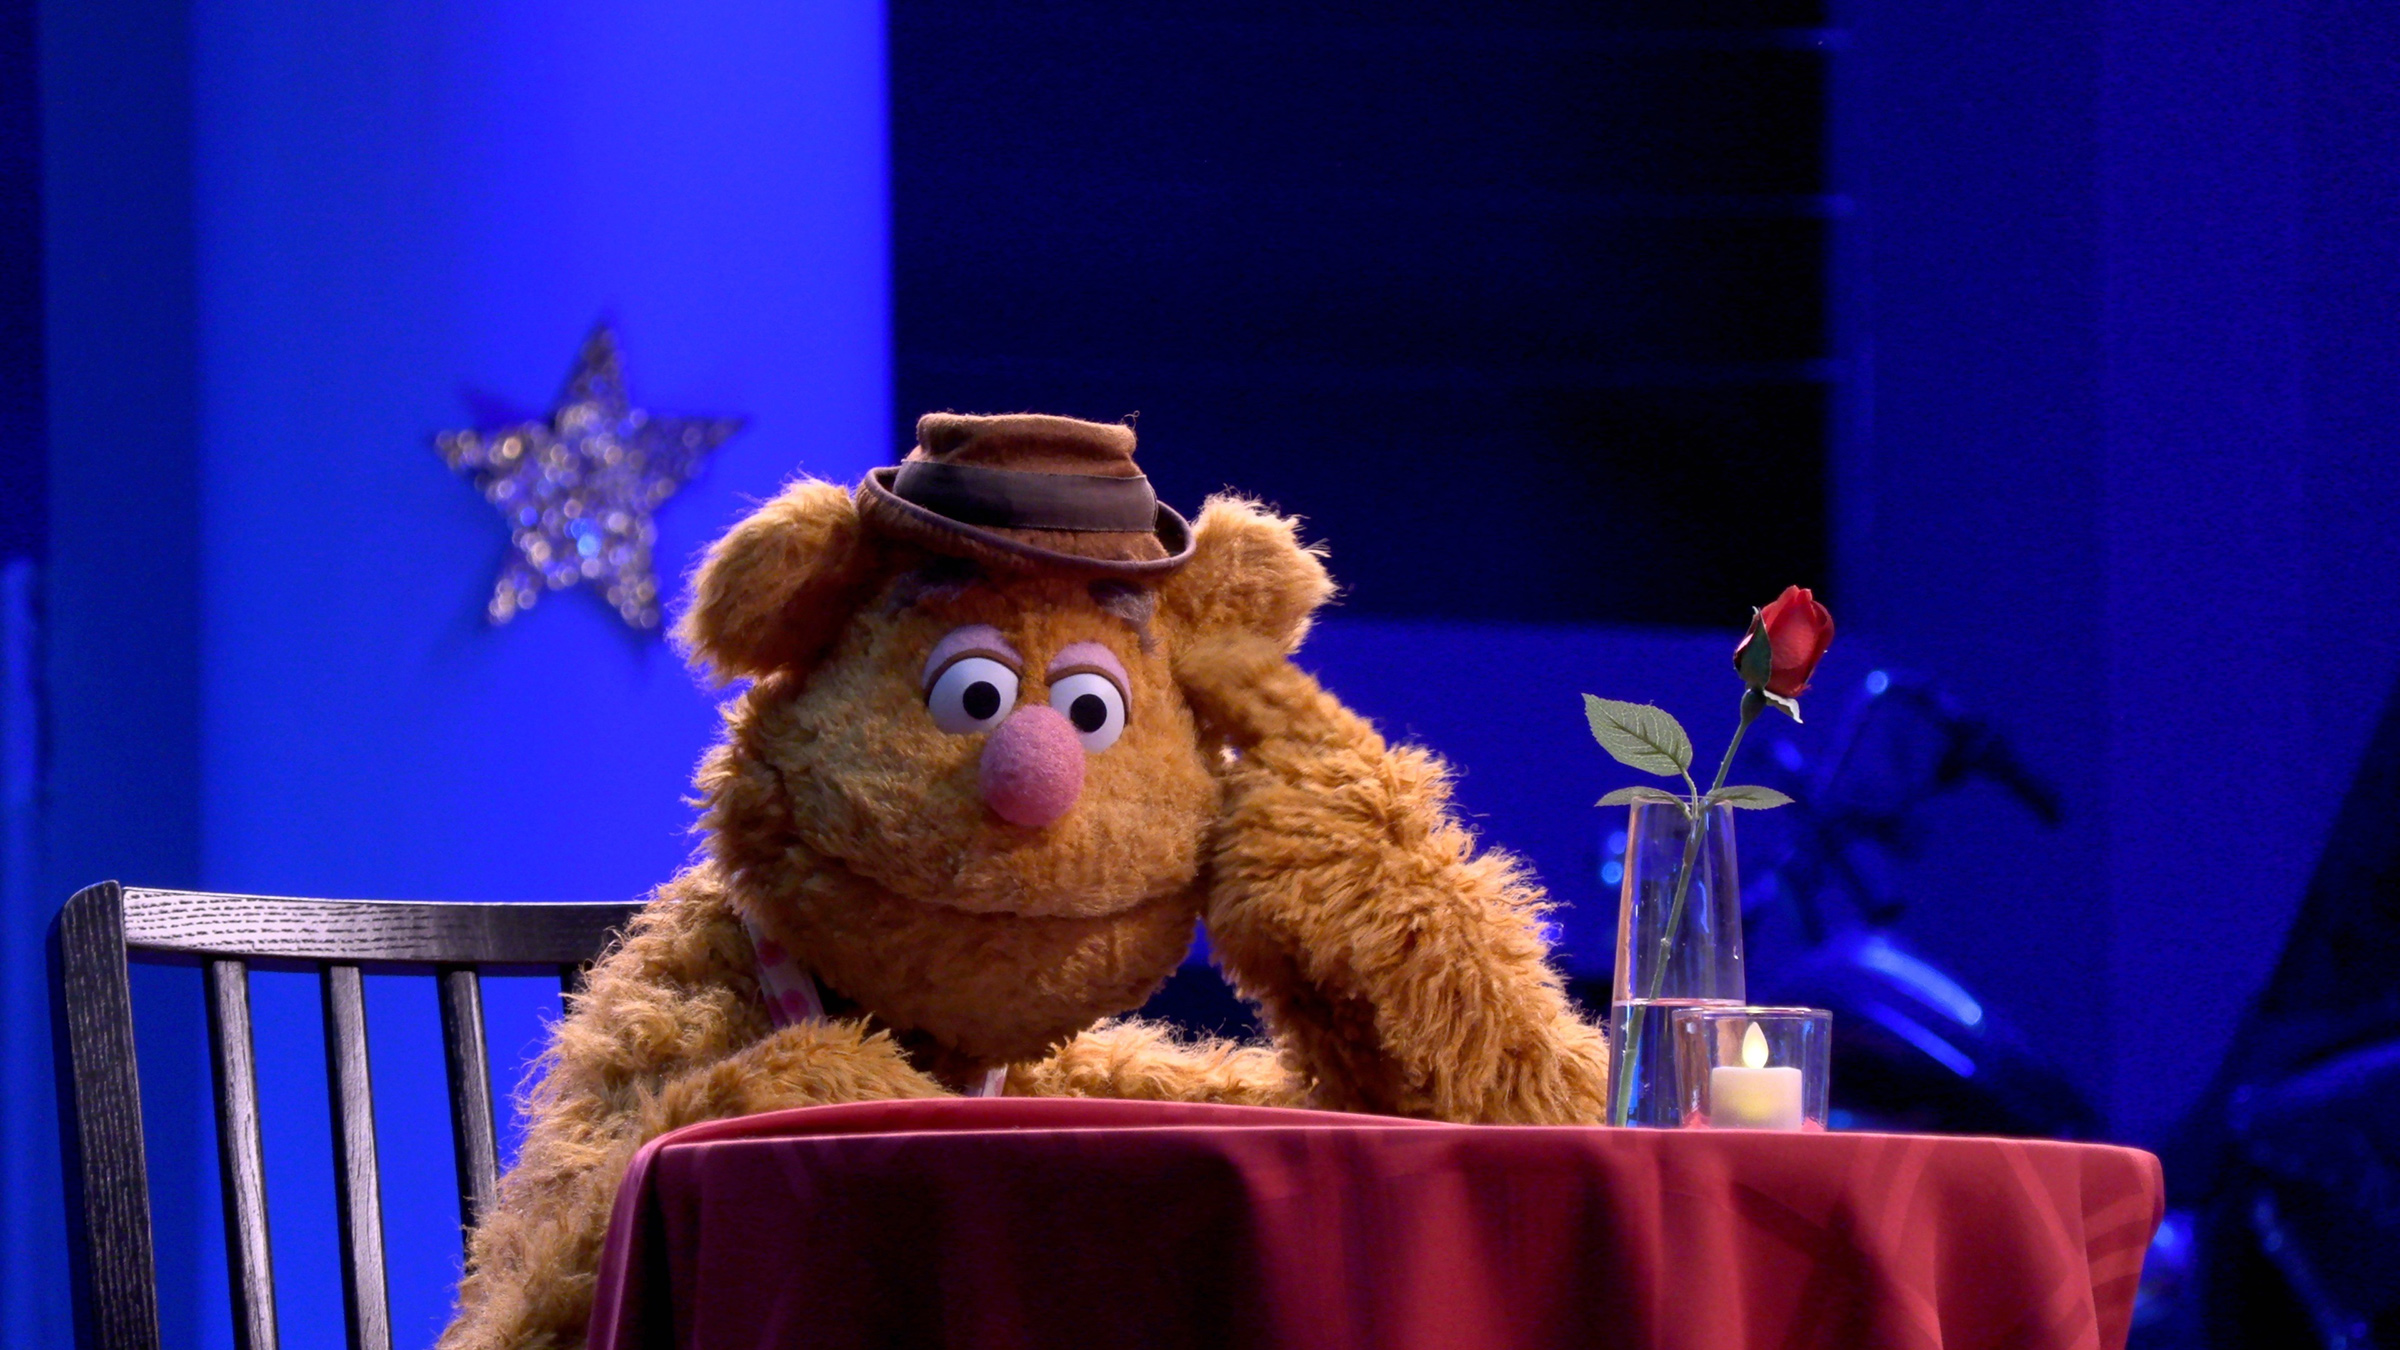 Wocka wocka! Hapless comedian Fozzie Bear returns to TV (Disney+)